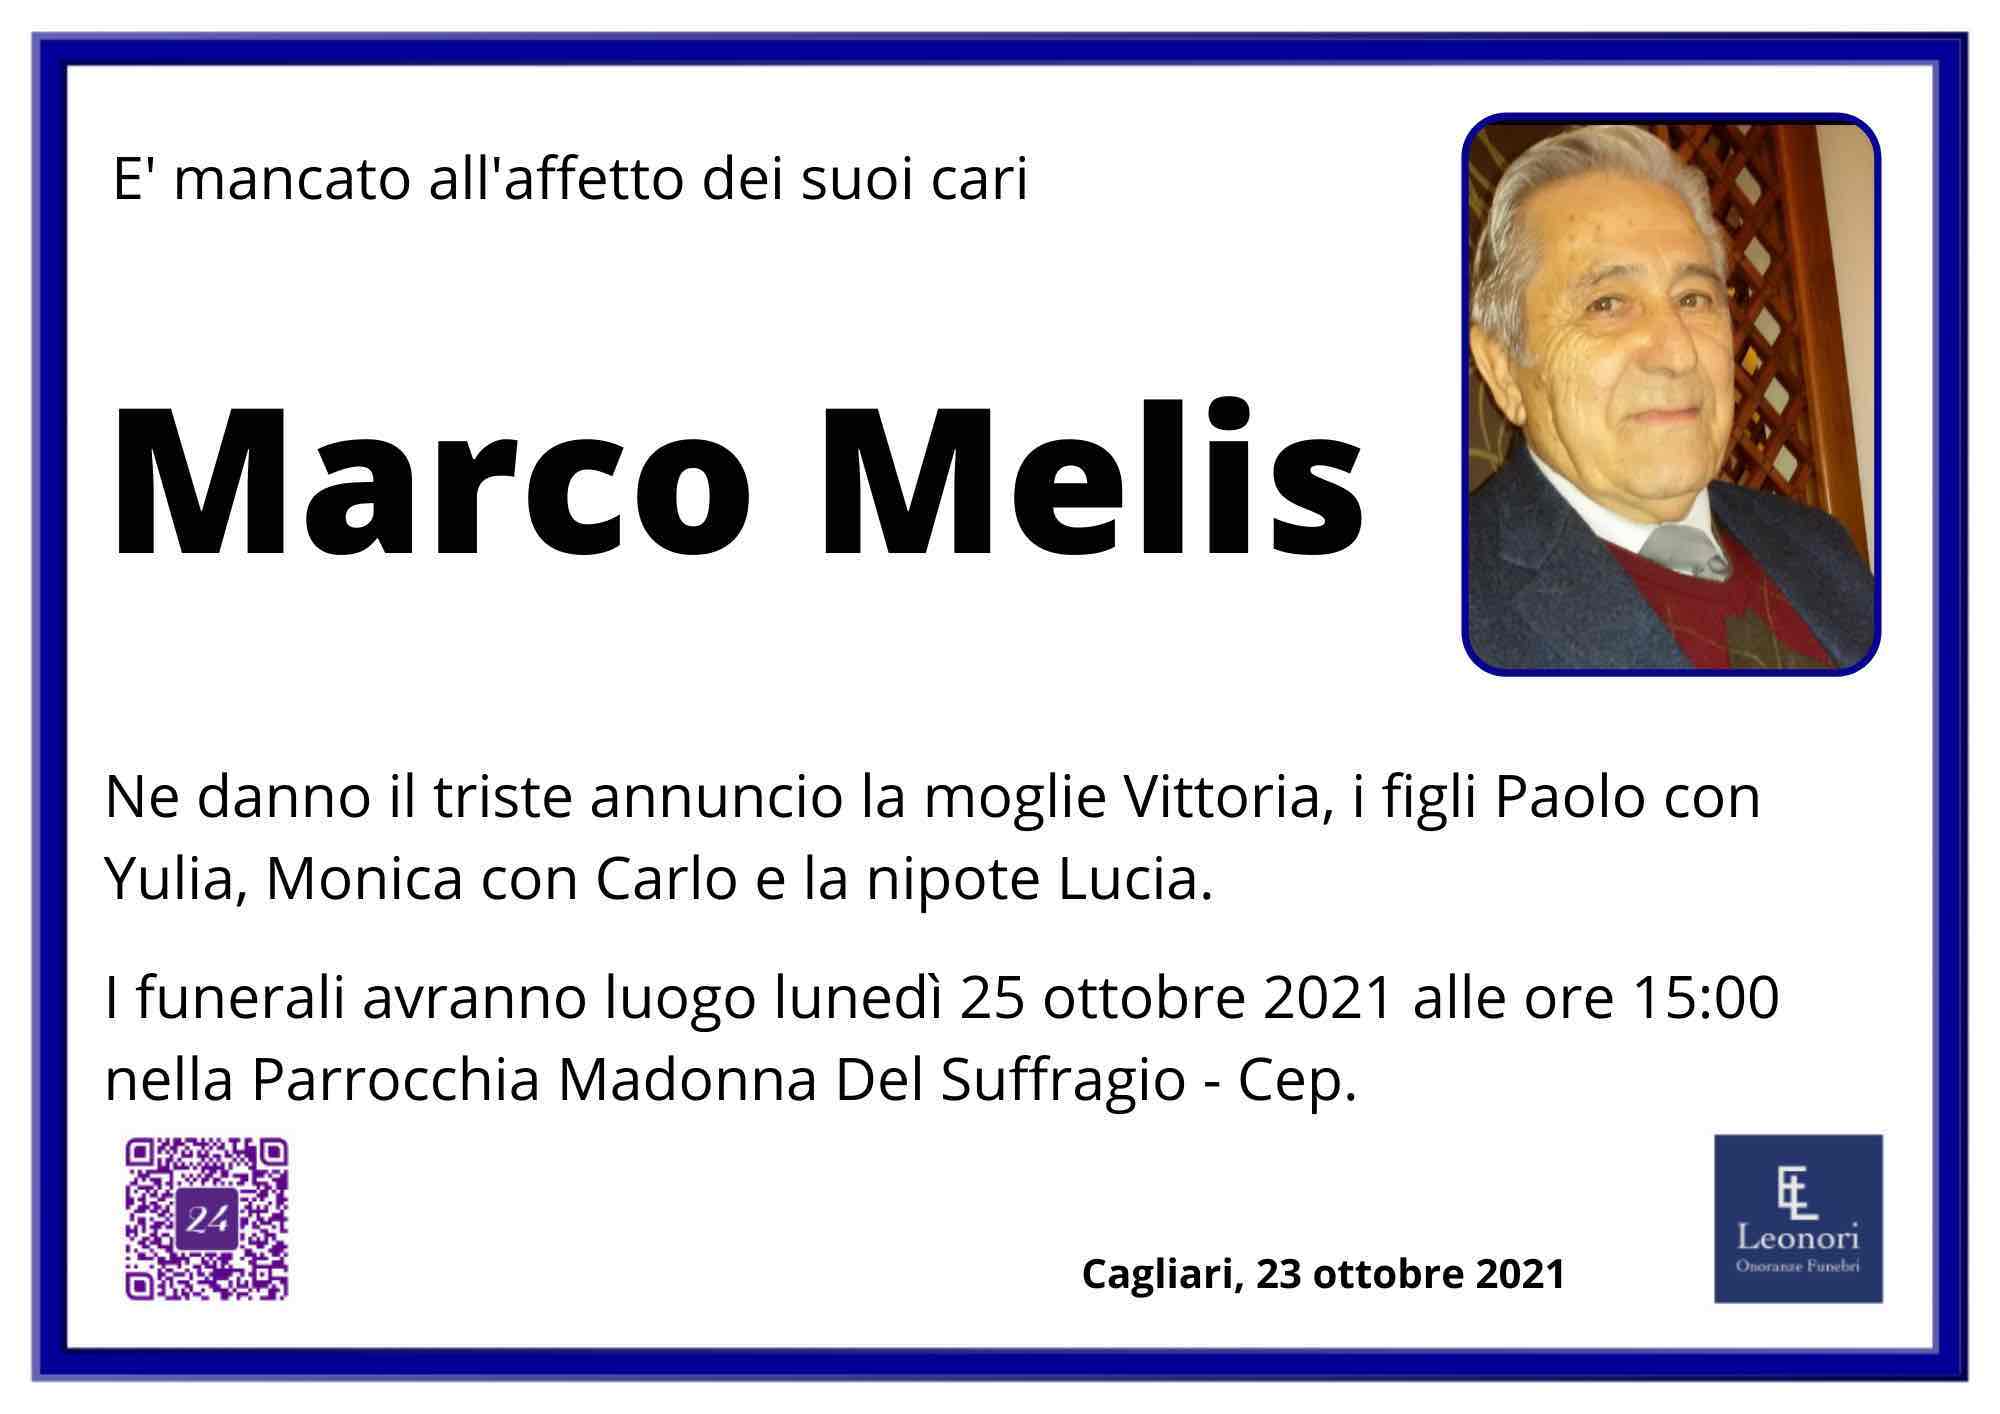 Marco Melis